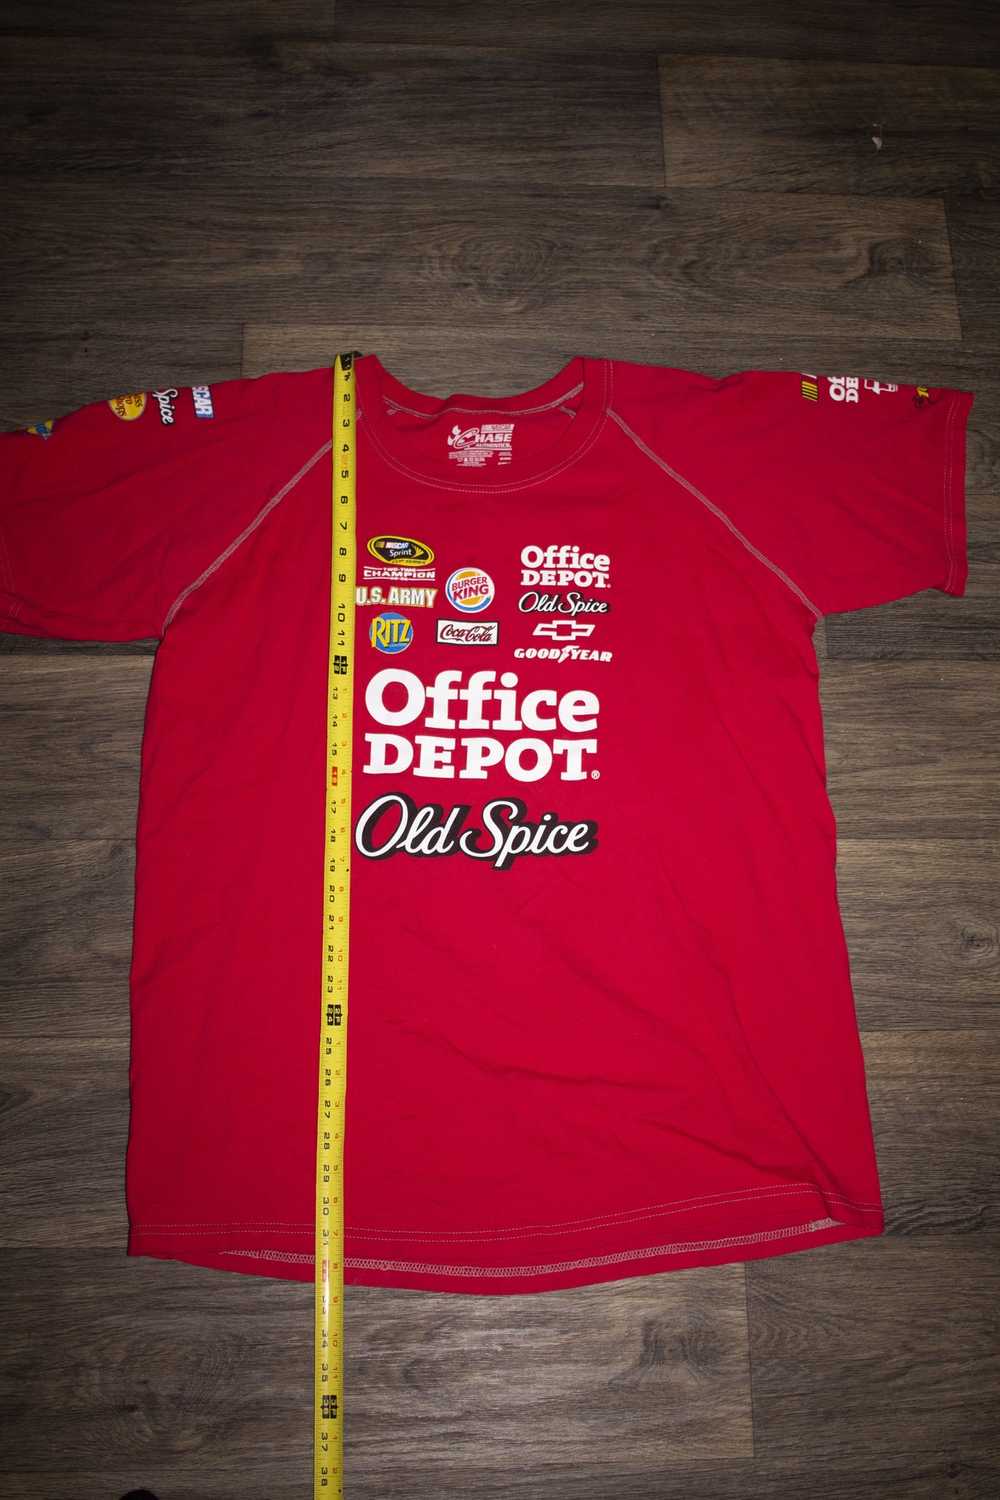 NASCAR Tony Stewart Sponsor T-Shirt - image 8